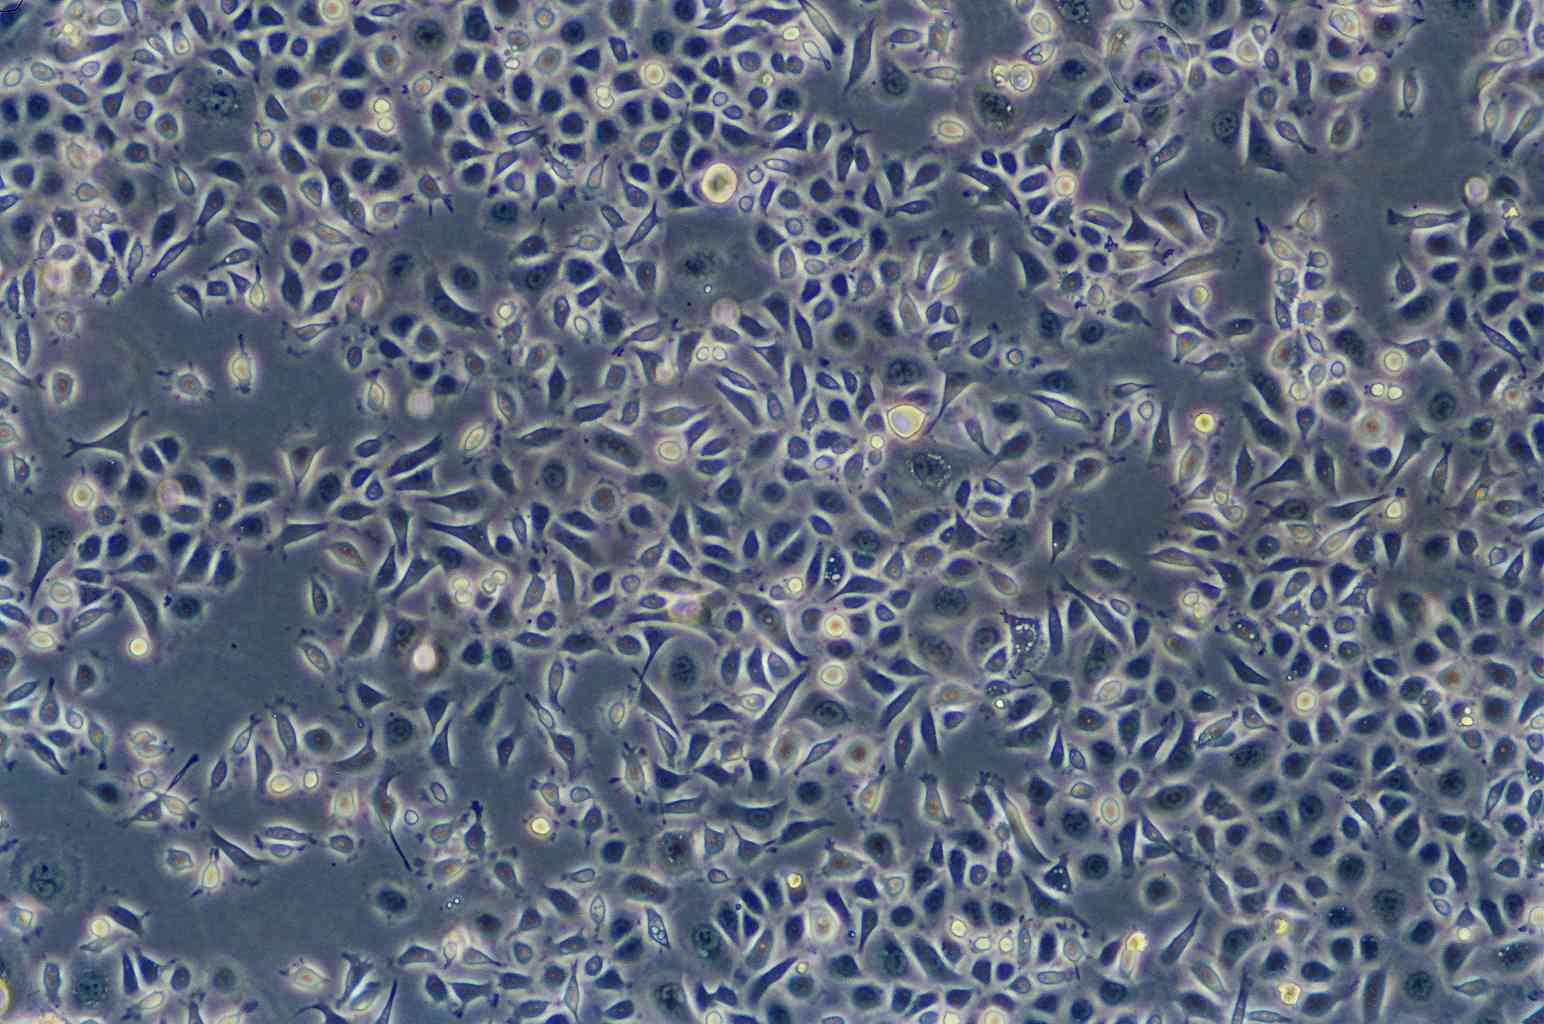 HEK293-FT epithelioid cells表达SV40T抗原人胚肾上皮细胞系